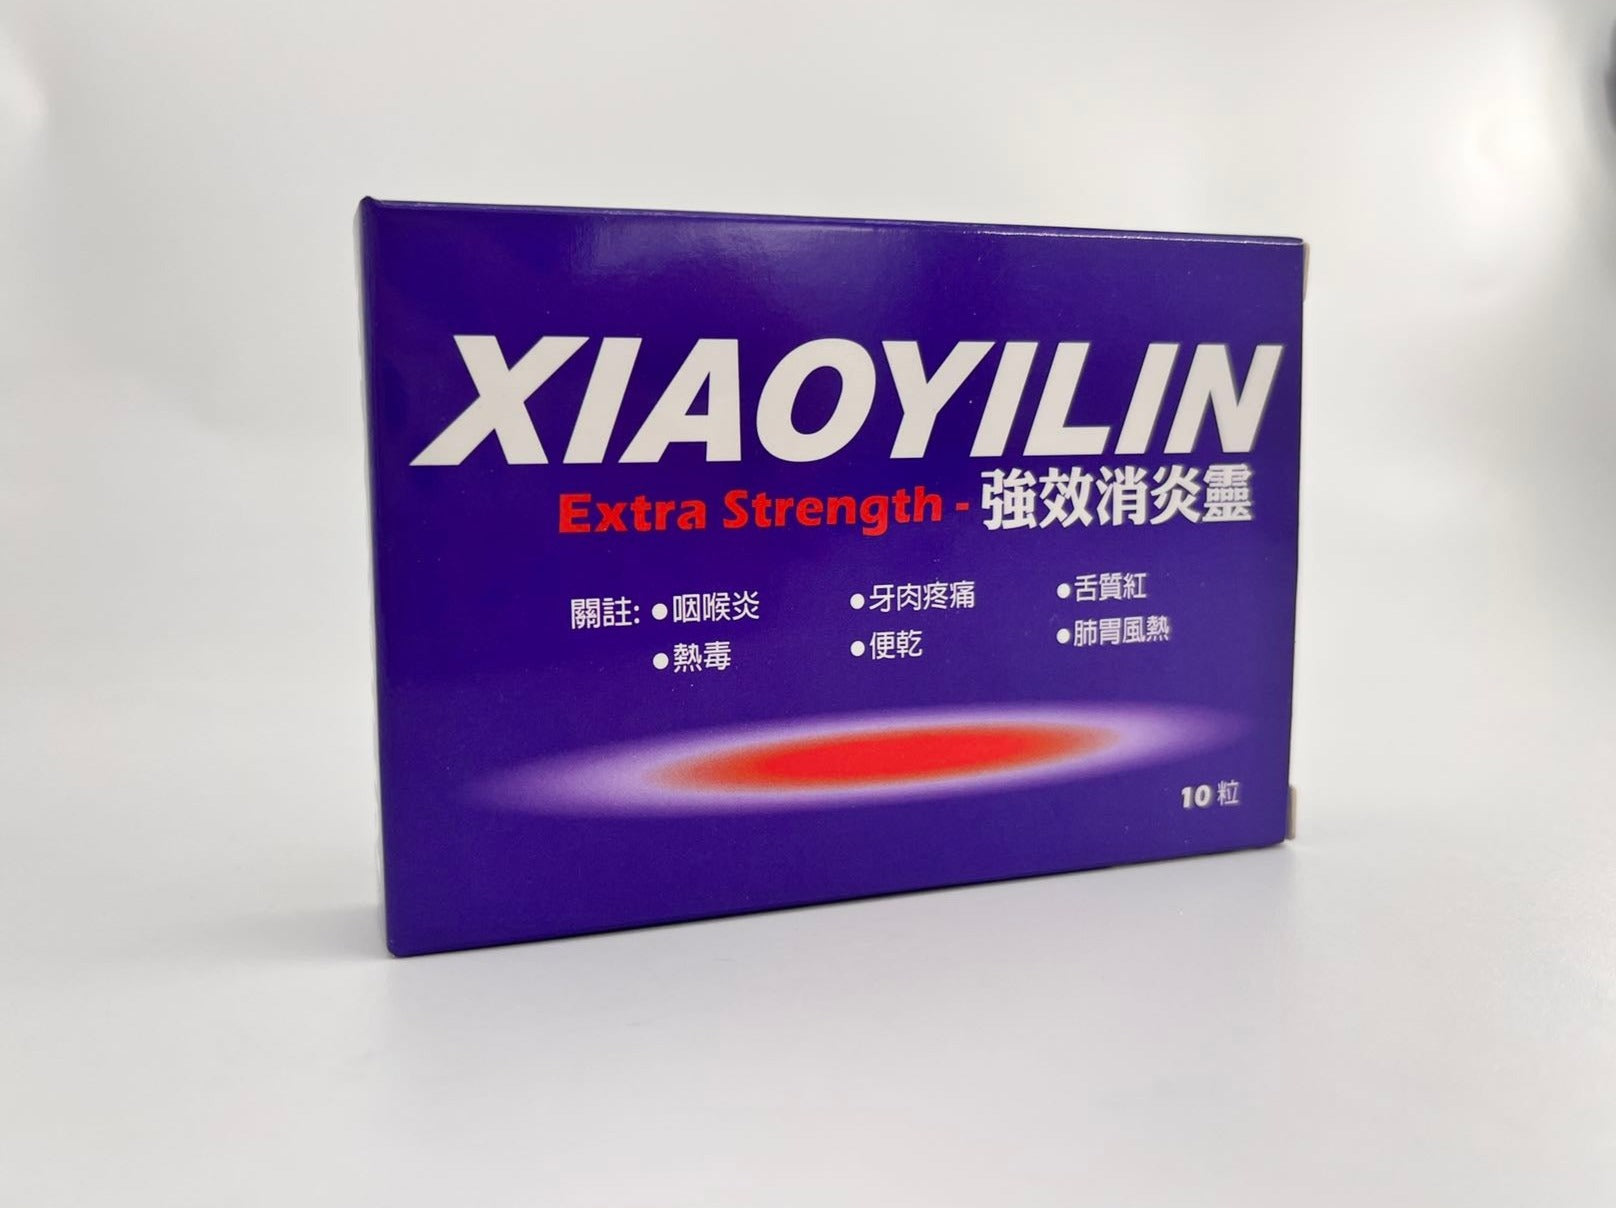 XIAOYILIN-強效消炎靈 （10粒） C168